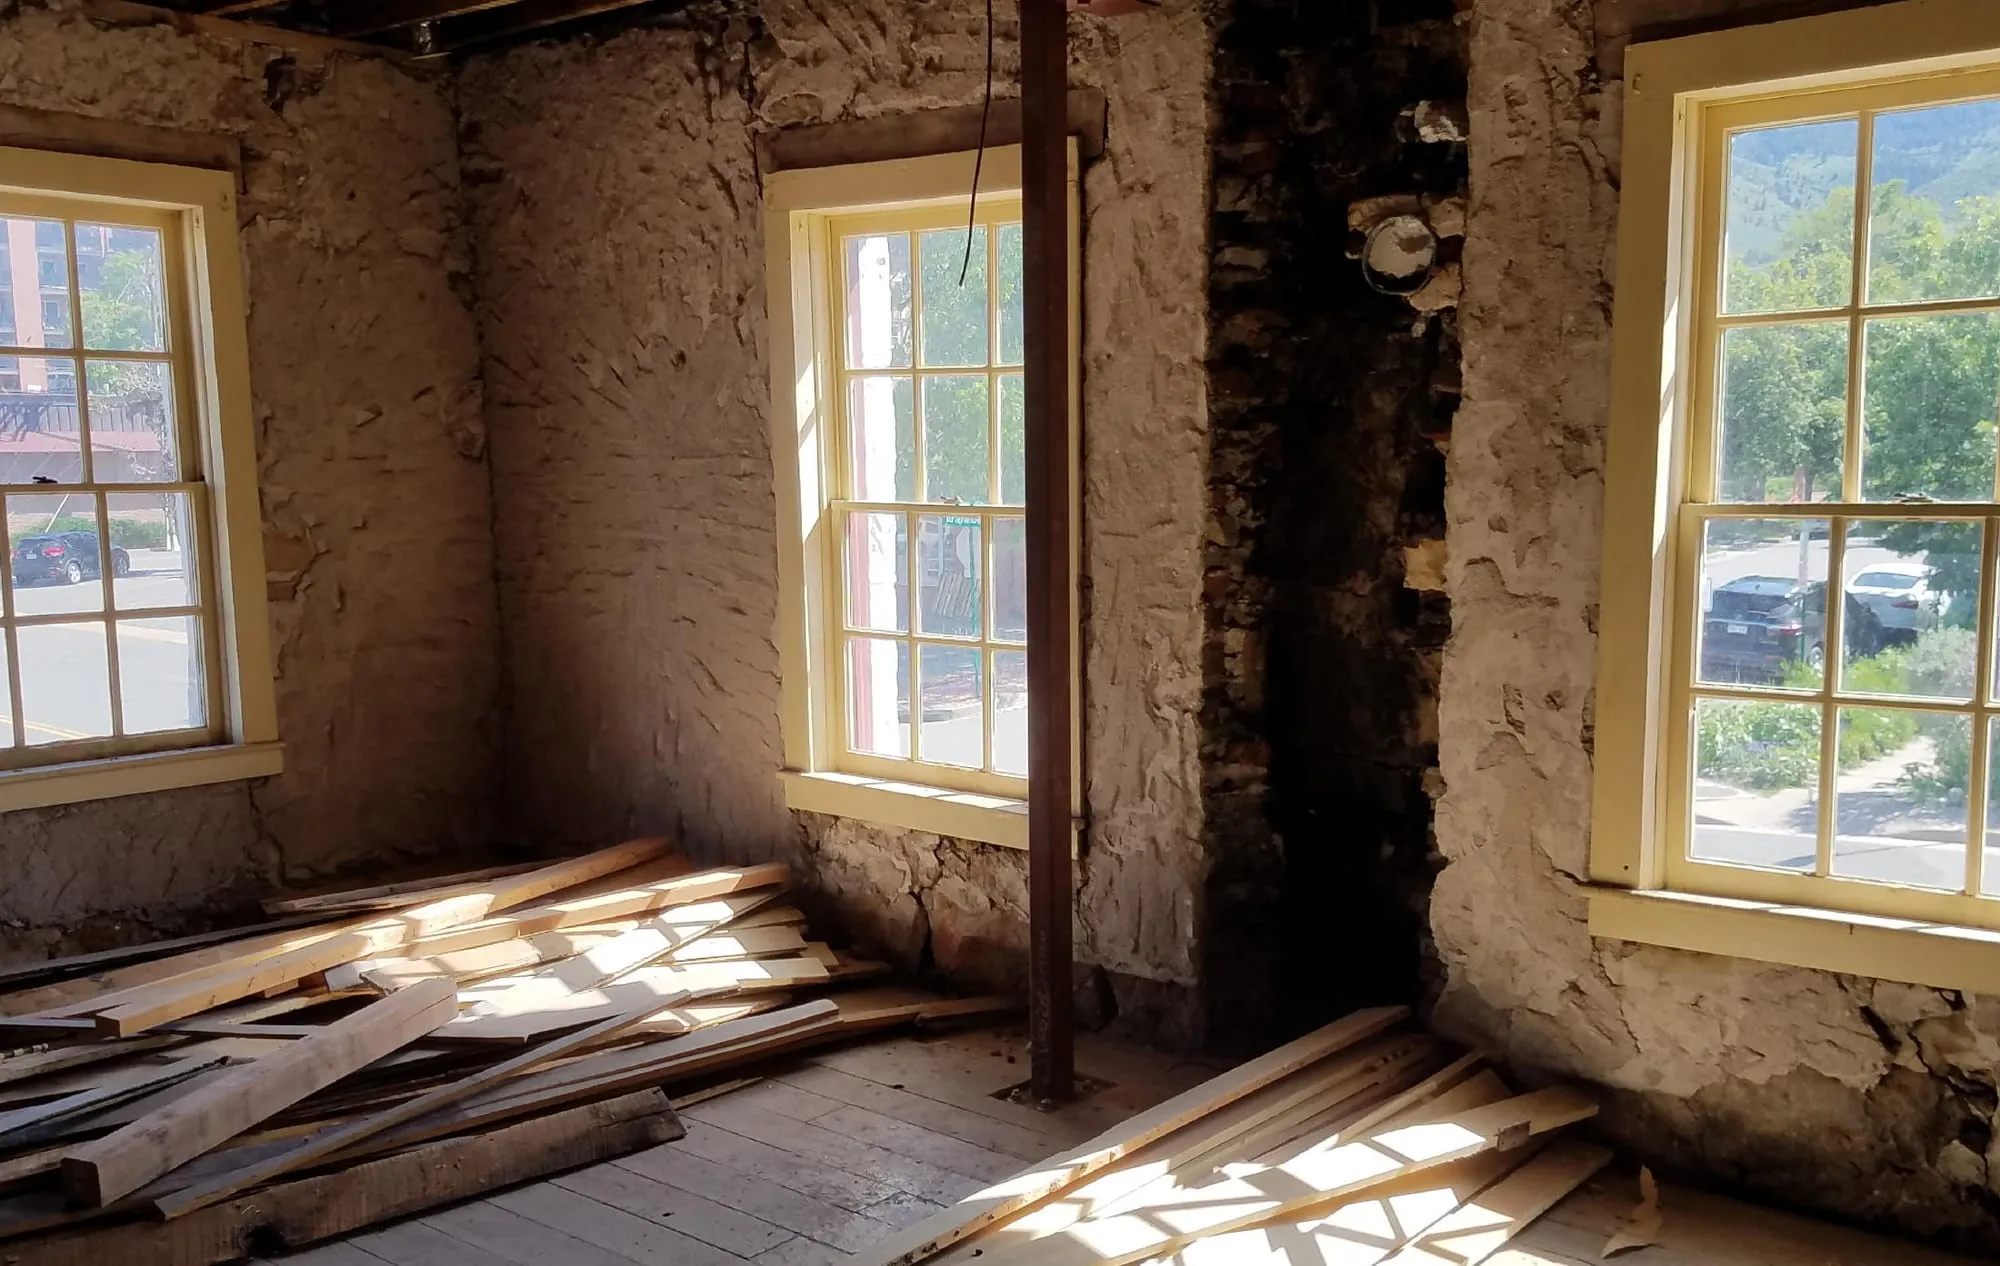 sun streaming through casement windows - lumber on the floors, stone walls